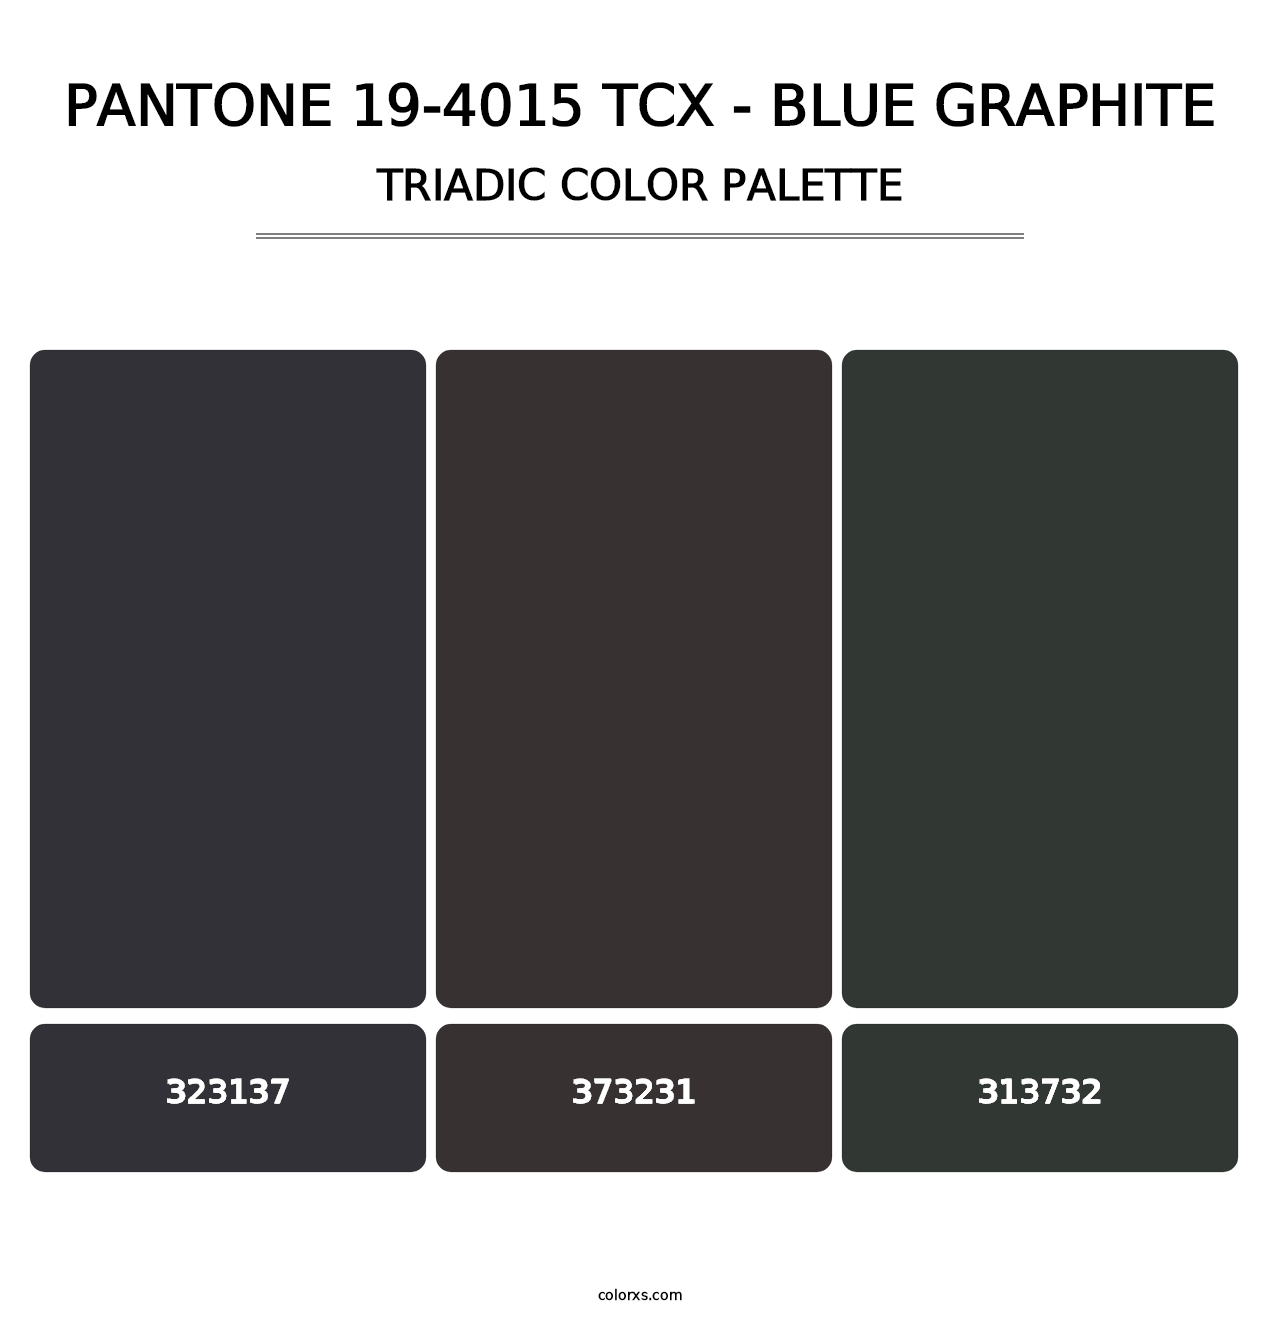 PANTONE 19-4015 TCX - Blue Graphite - Triadic Color Palette